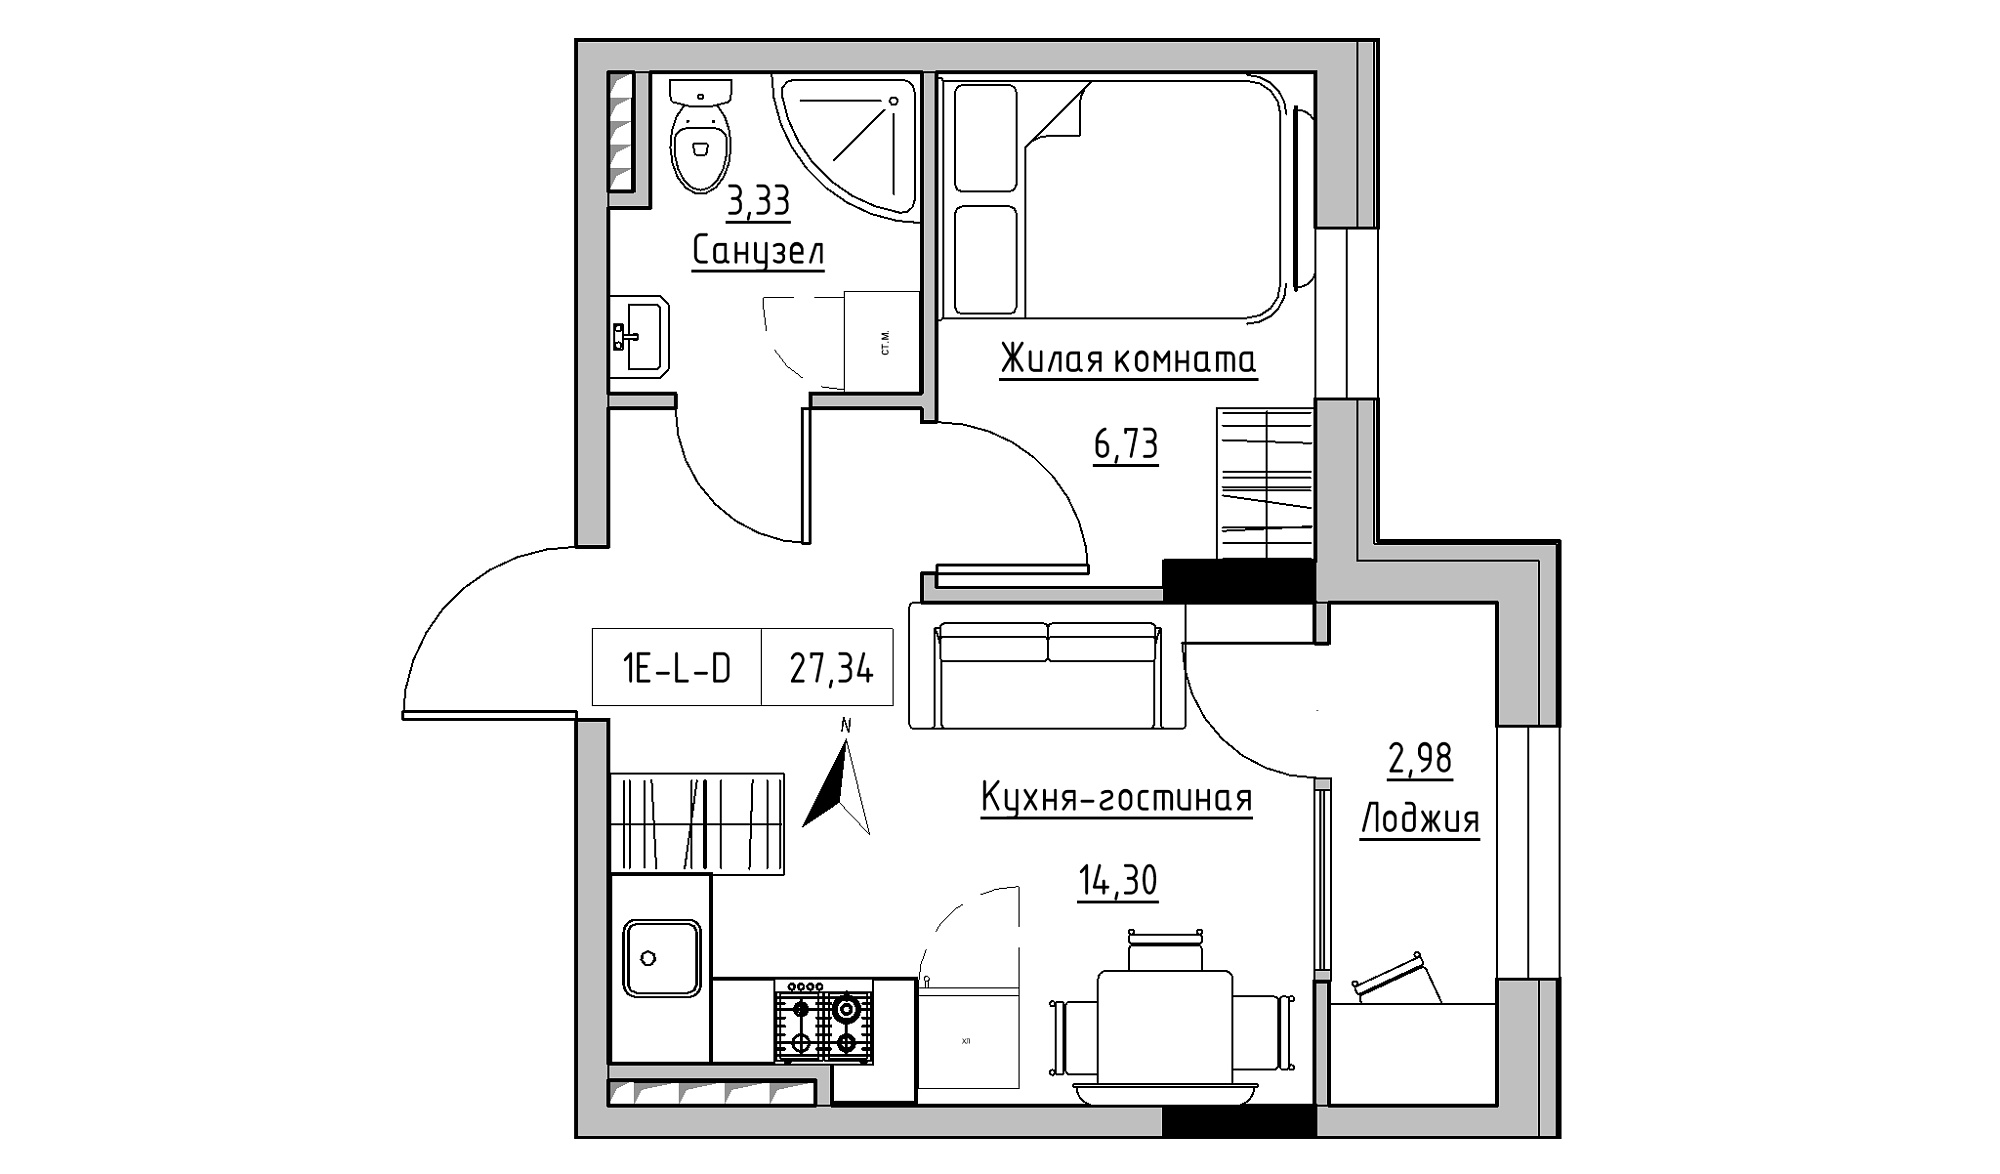 Planning 1-rm flats area 27.34m2, KS-025-04/0001.